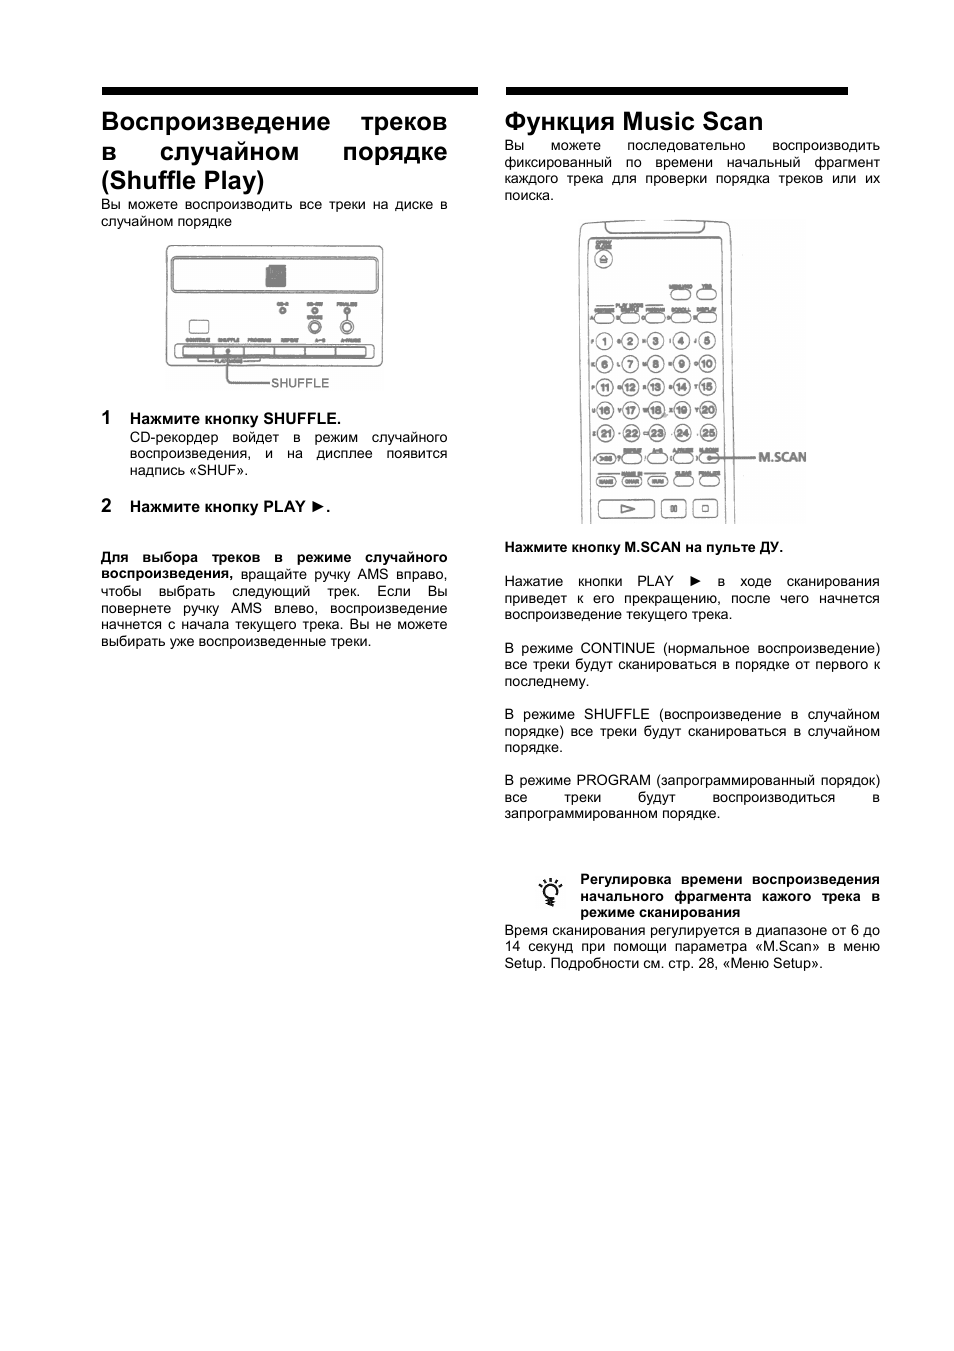 Функция music scan | Инструкция по эксплуатации Sony cdr_w33 | Страница 26 / 34